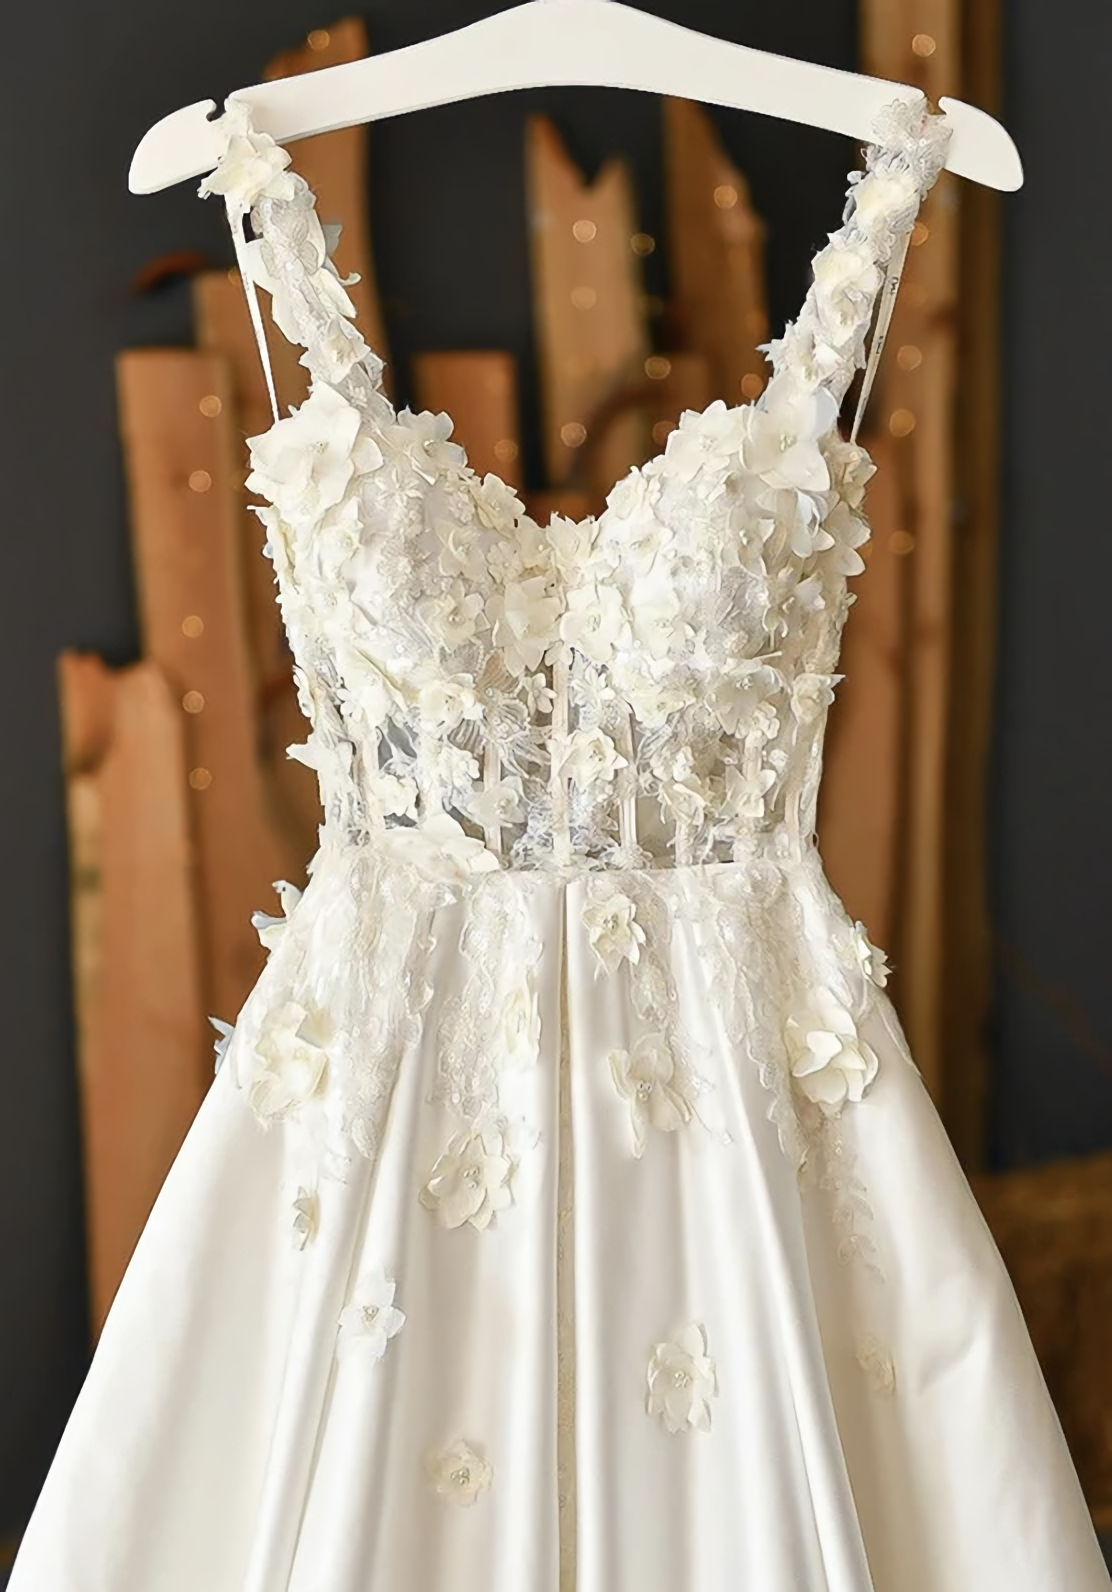 Gown Dress, White Satin Applique Long Prom Dress, Evening Dress